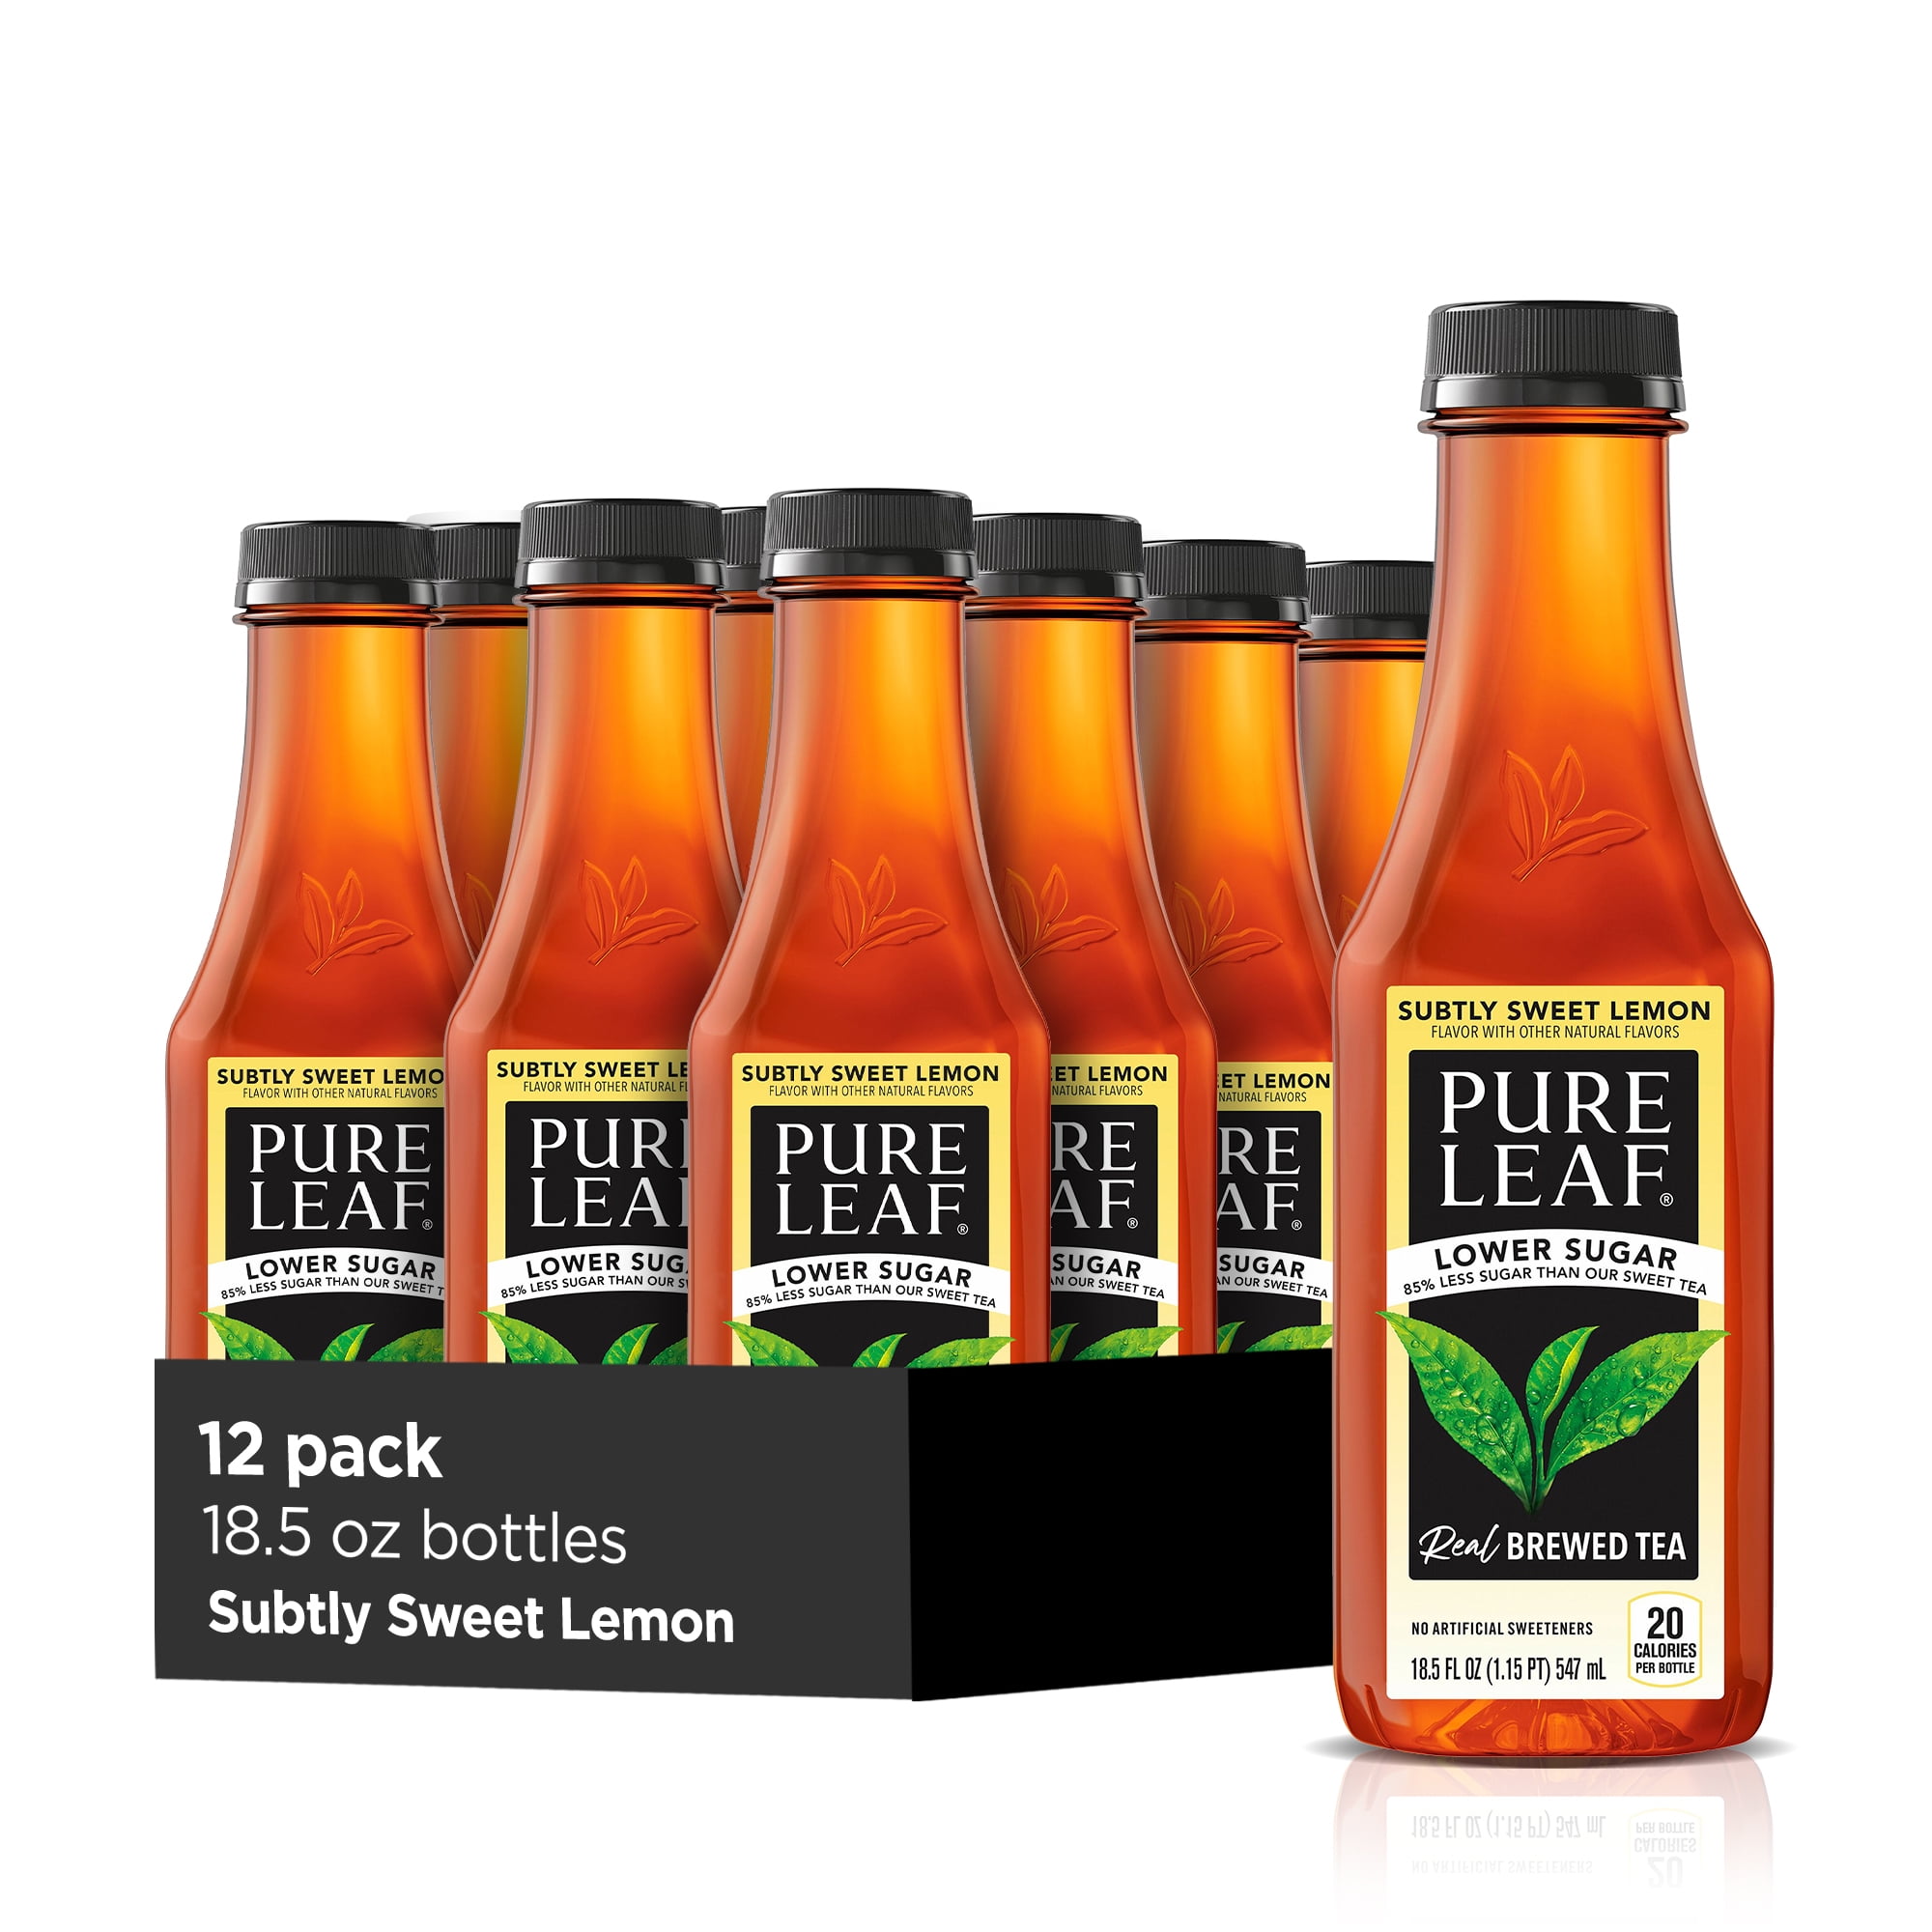 Pure Leaf, Subtly Sweet Lemon Tea, 18.5 oz, 12 Pack